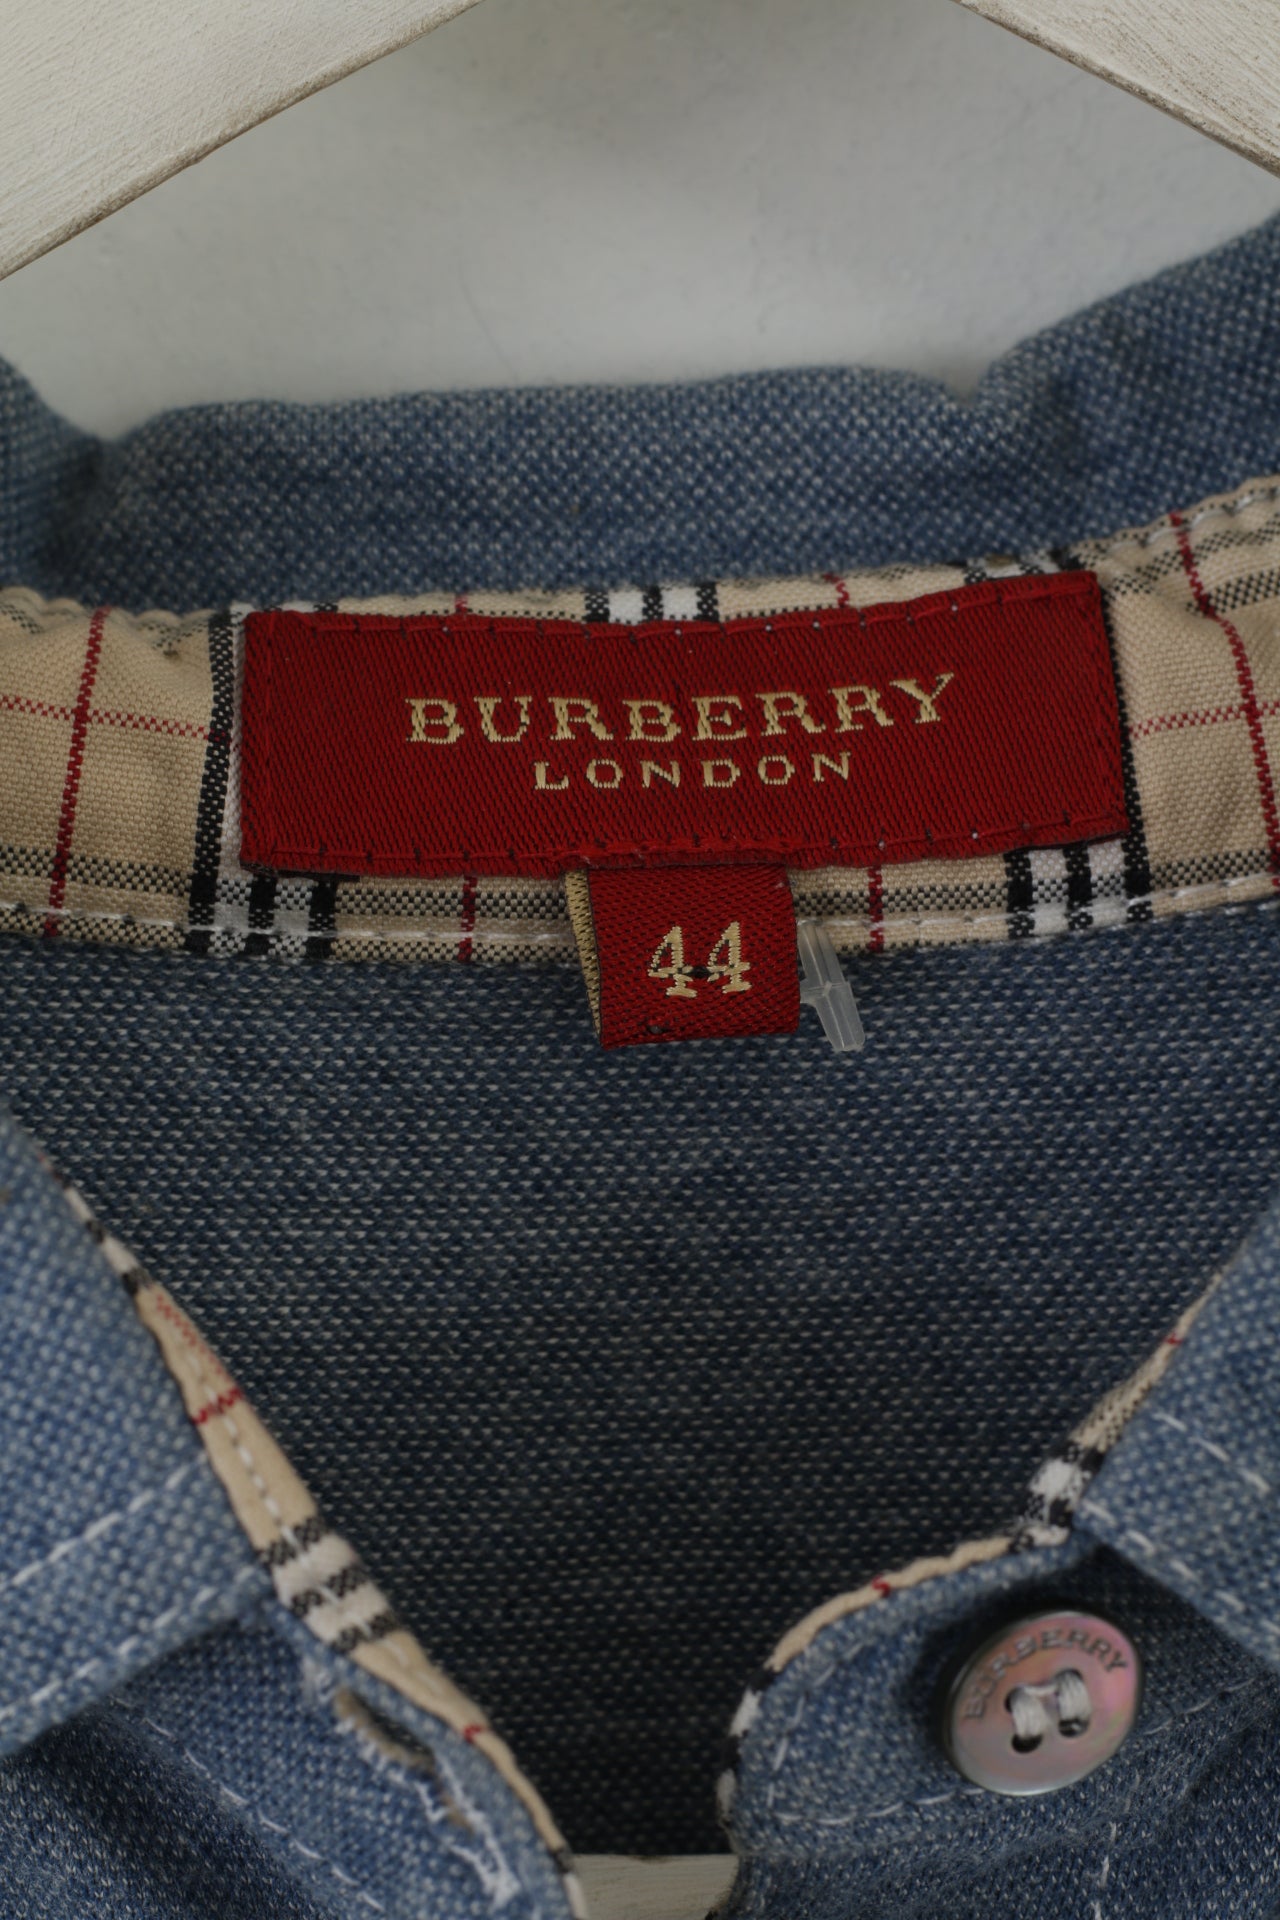 Burberry London Womens 44 S Shirt Sleeveless Blue Cotton Top Vest